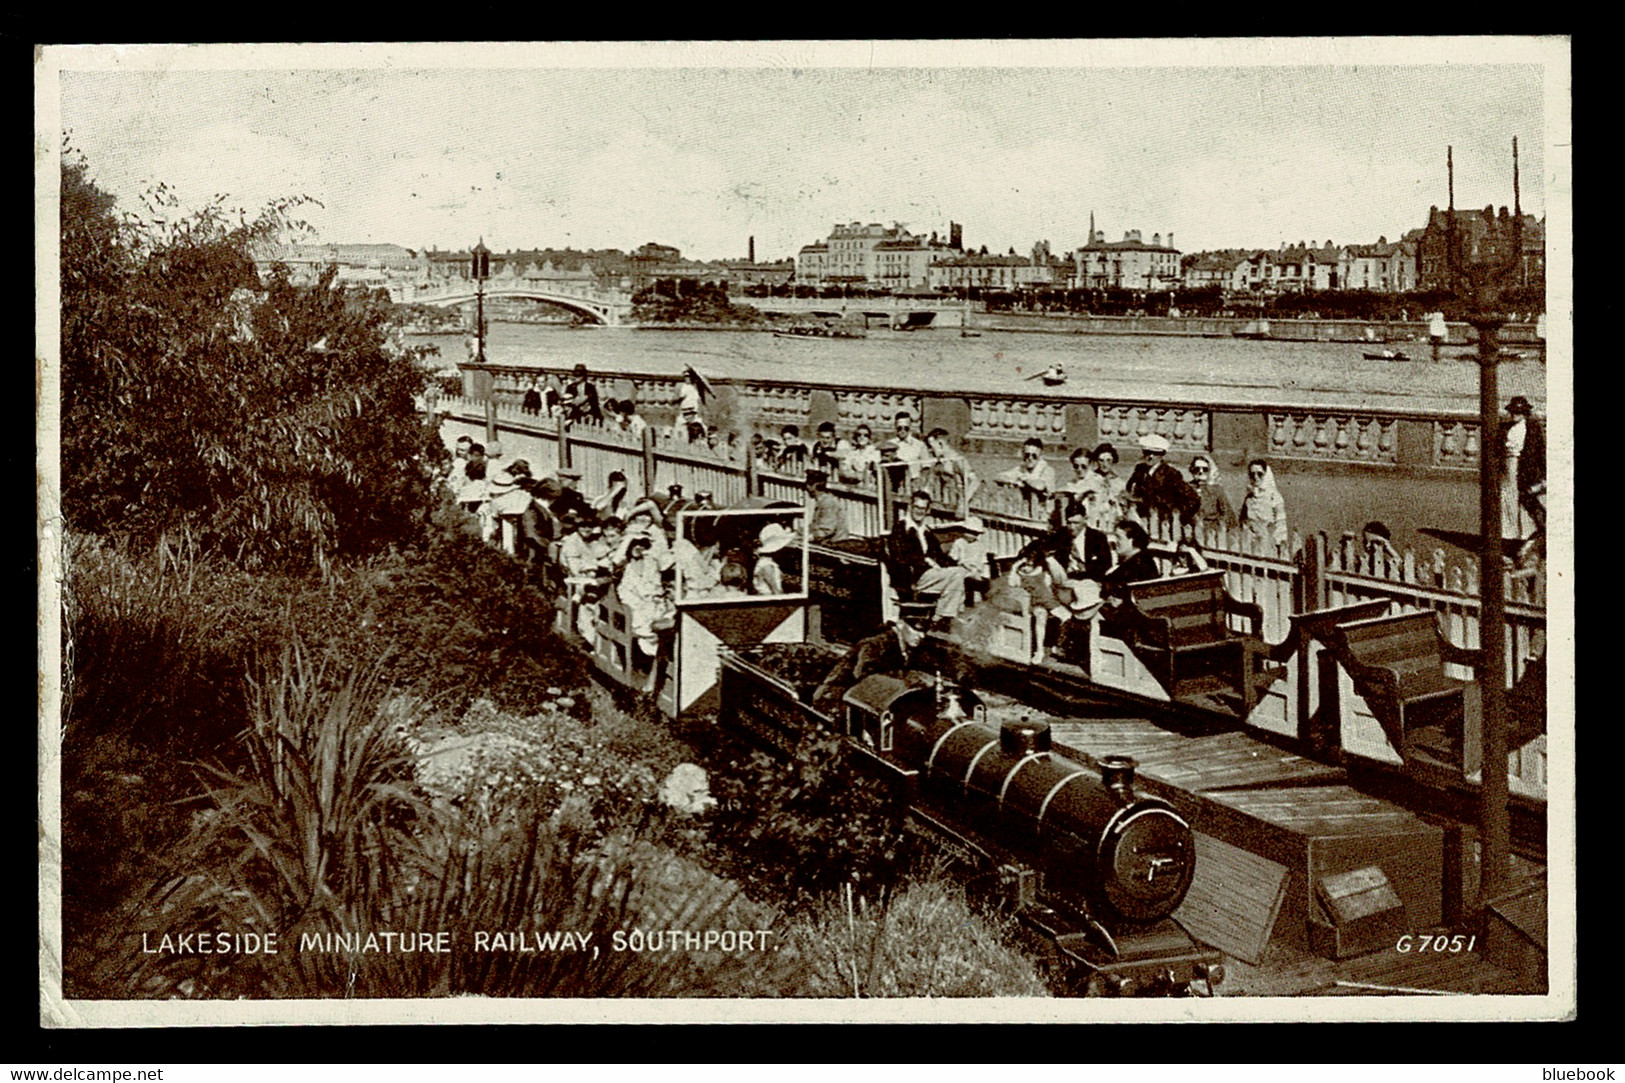 Ref 1591 - 1945 Postcard Lakeside Miniature Railway Southport - Victory Bells Slogan Postmark - Southport